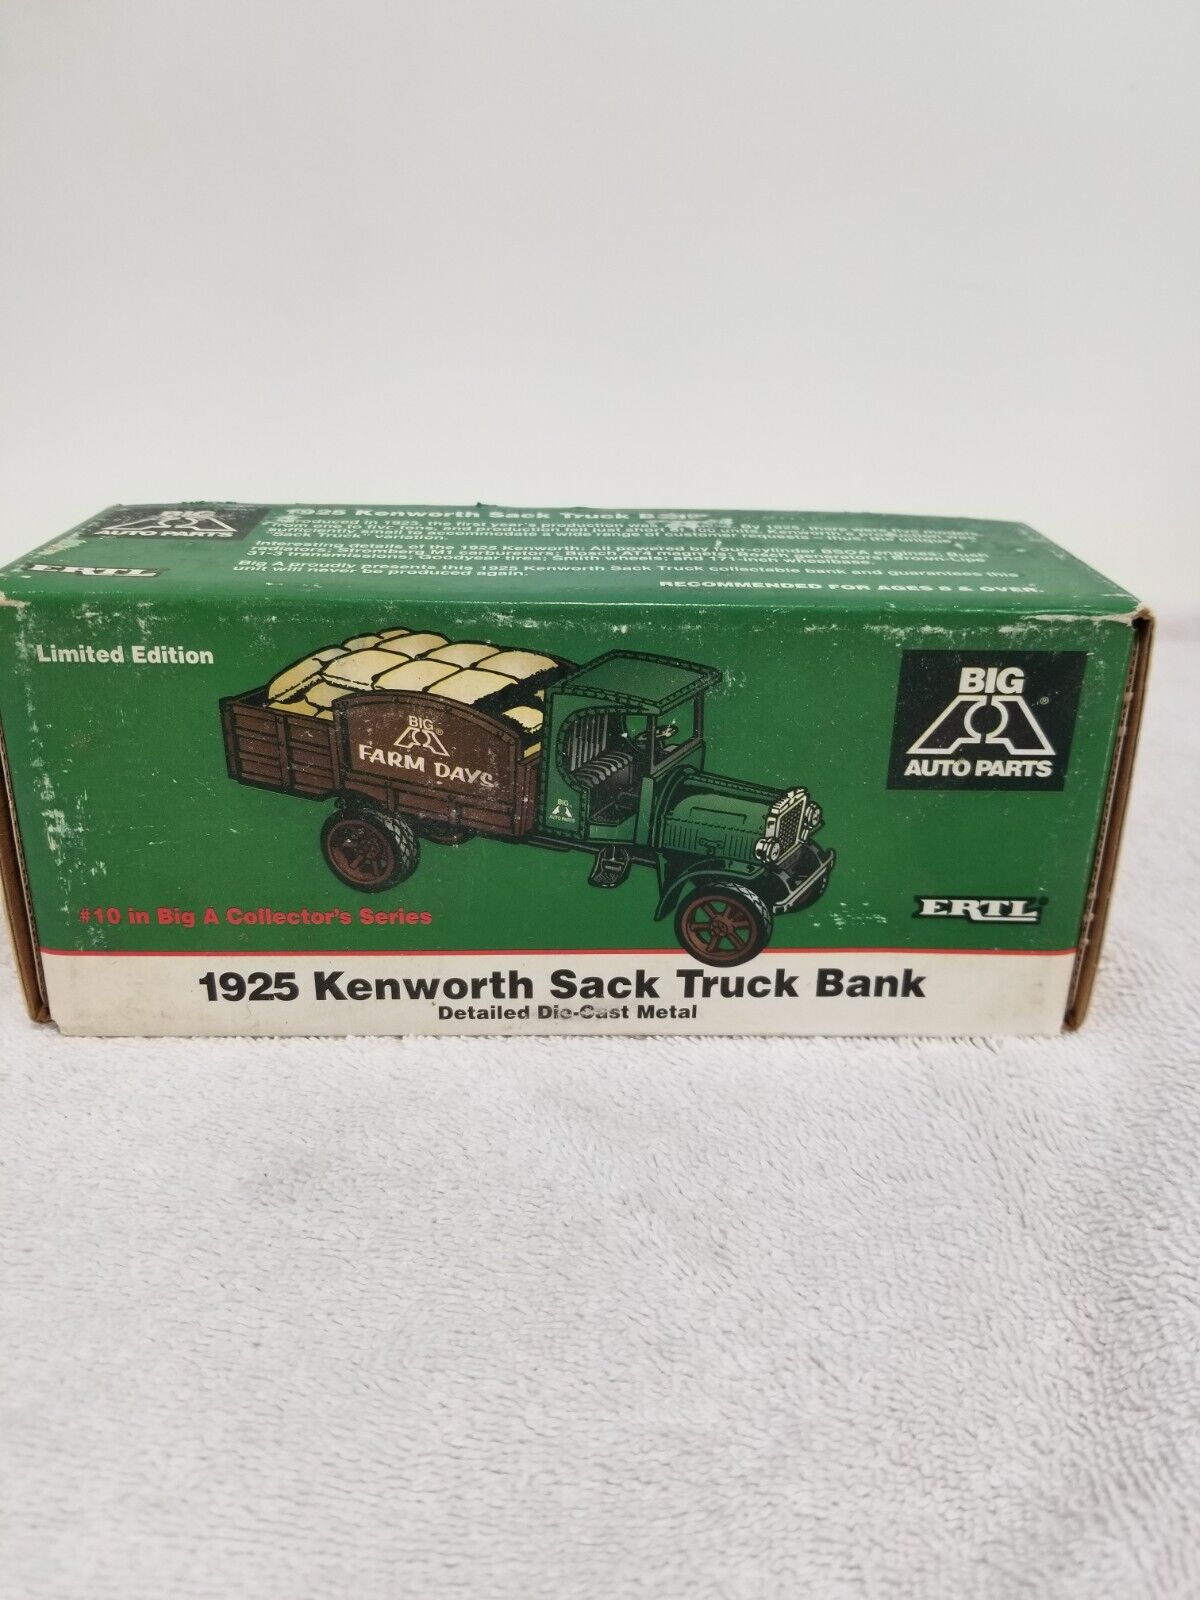 Ertl Big A Farm Days 1925 Kenworth Sack Truck Die Cast Metal Bank, New, Open Box